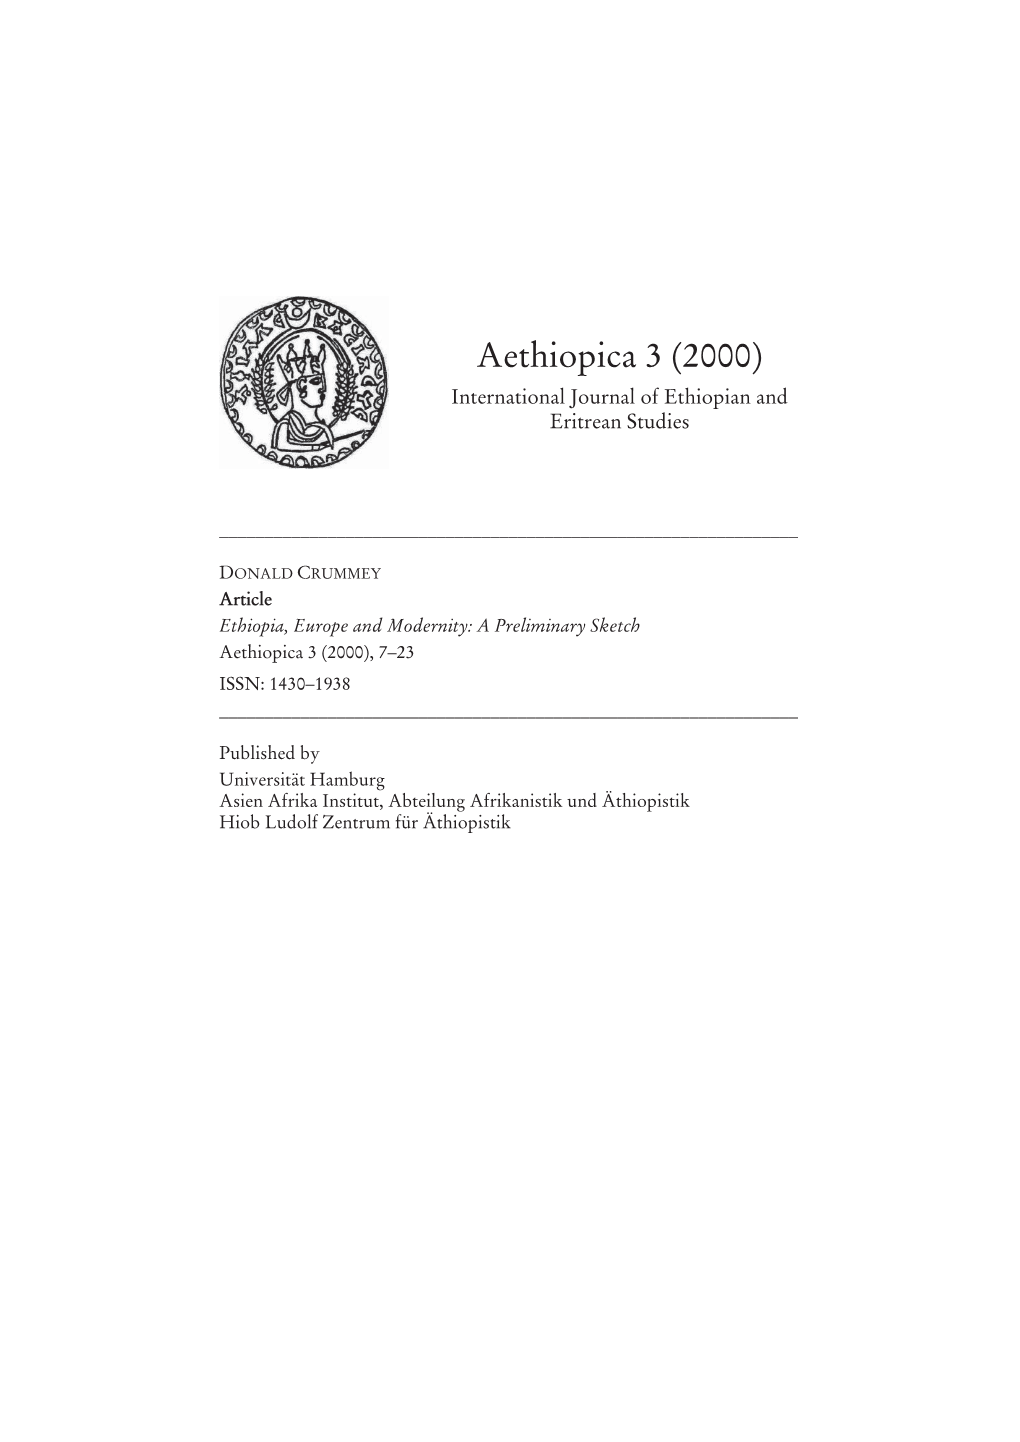 Aethiopica 3 (2000) International Journal of Ethiopian and Eritrean Studies